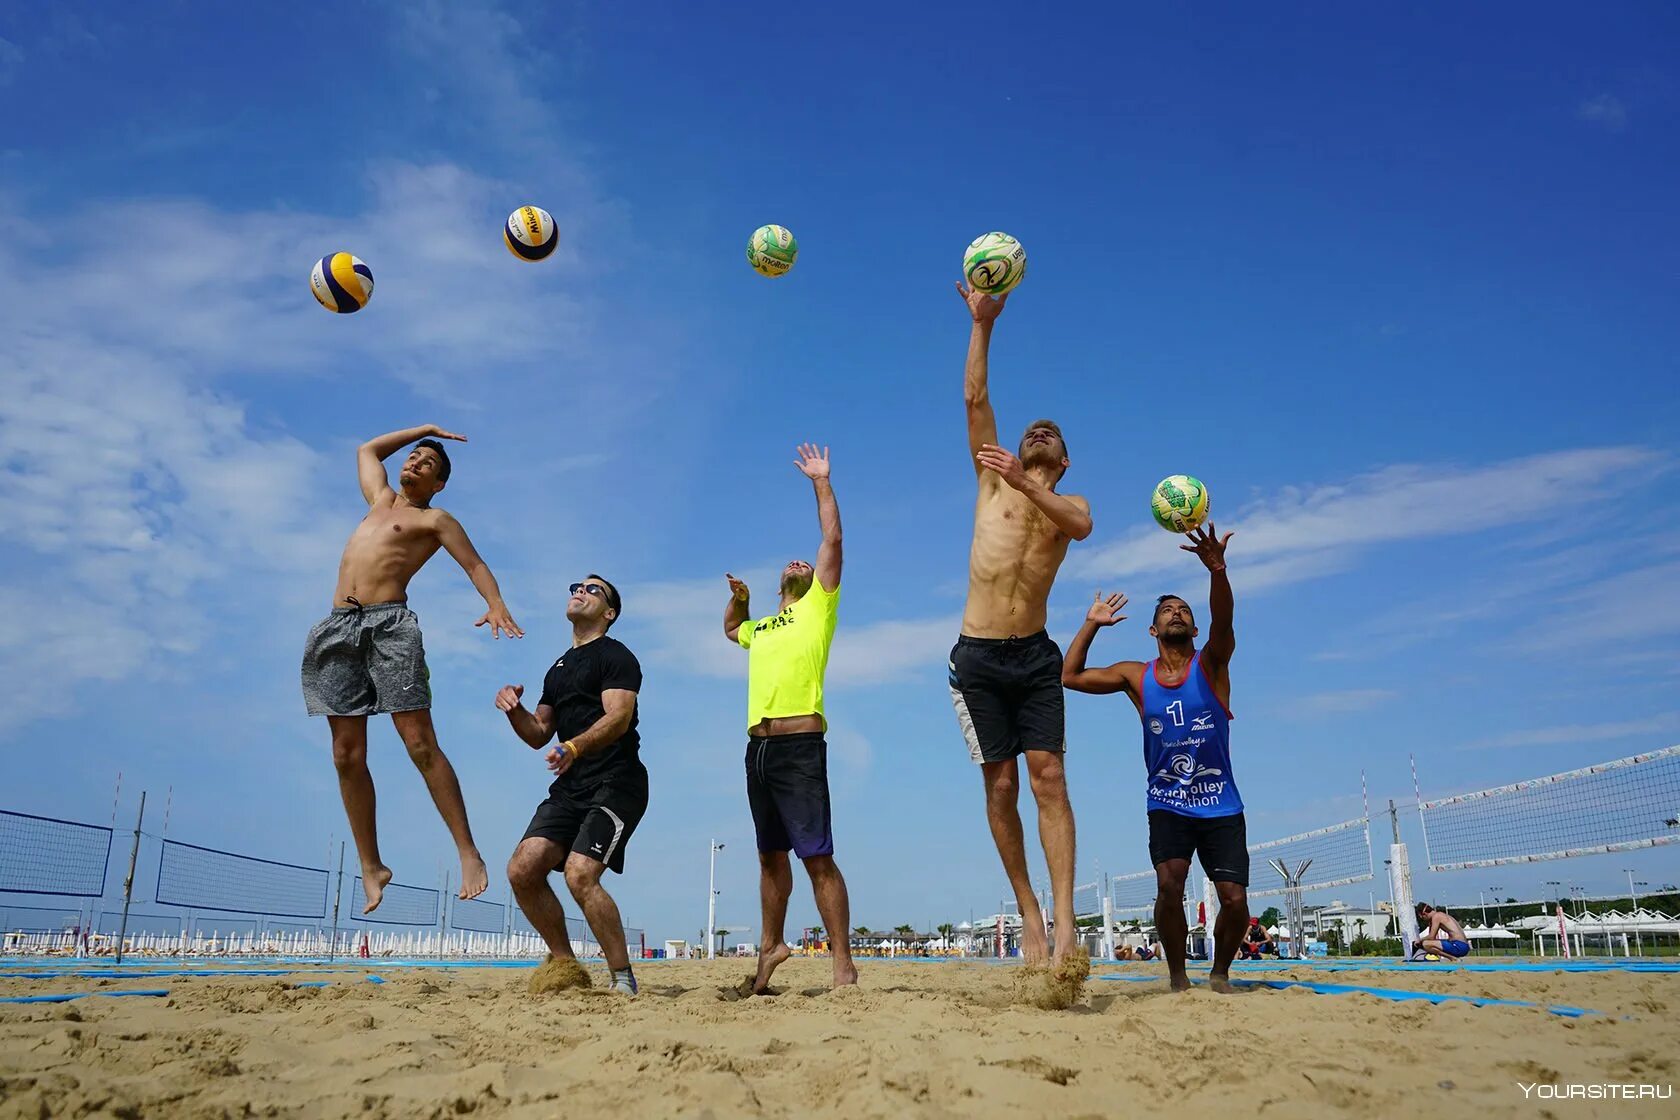 Игроки пляжного волейбола. Пляжный волейбол. Волейбол на пляже. Летний спорт. Пляжный волейбол спорт.